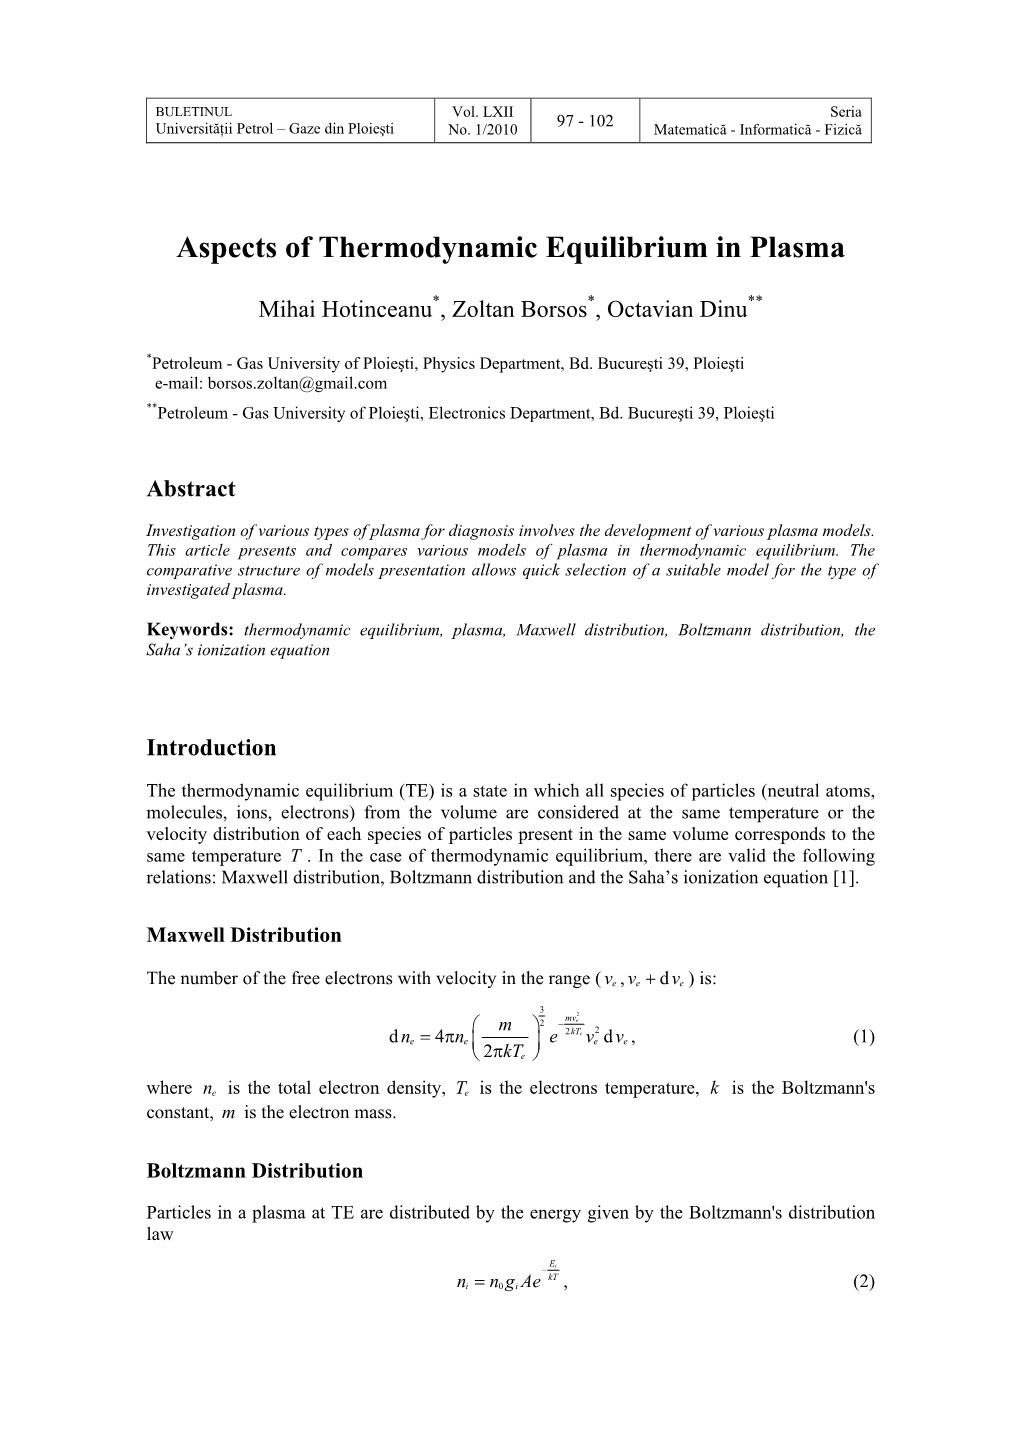 Aspects of Thermodynamic Equilibrium in Plasma